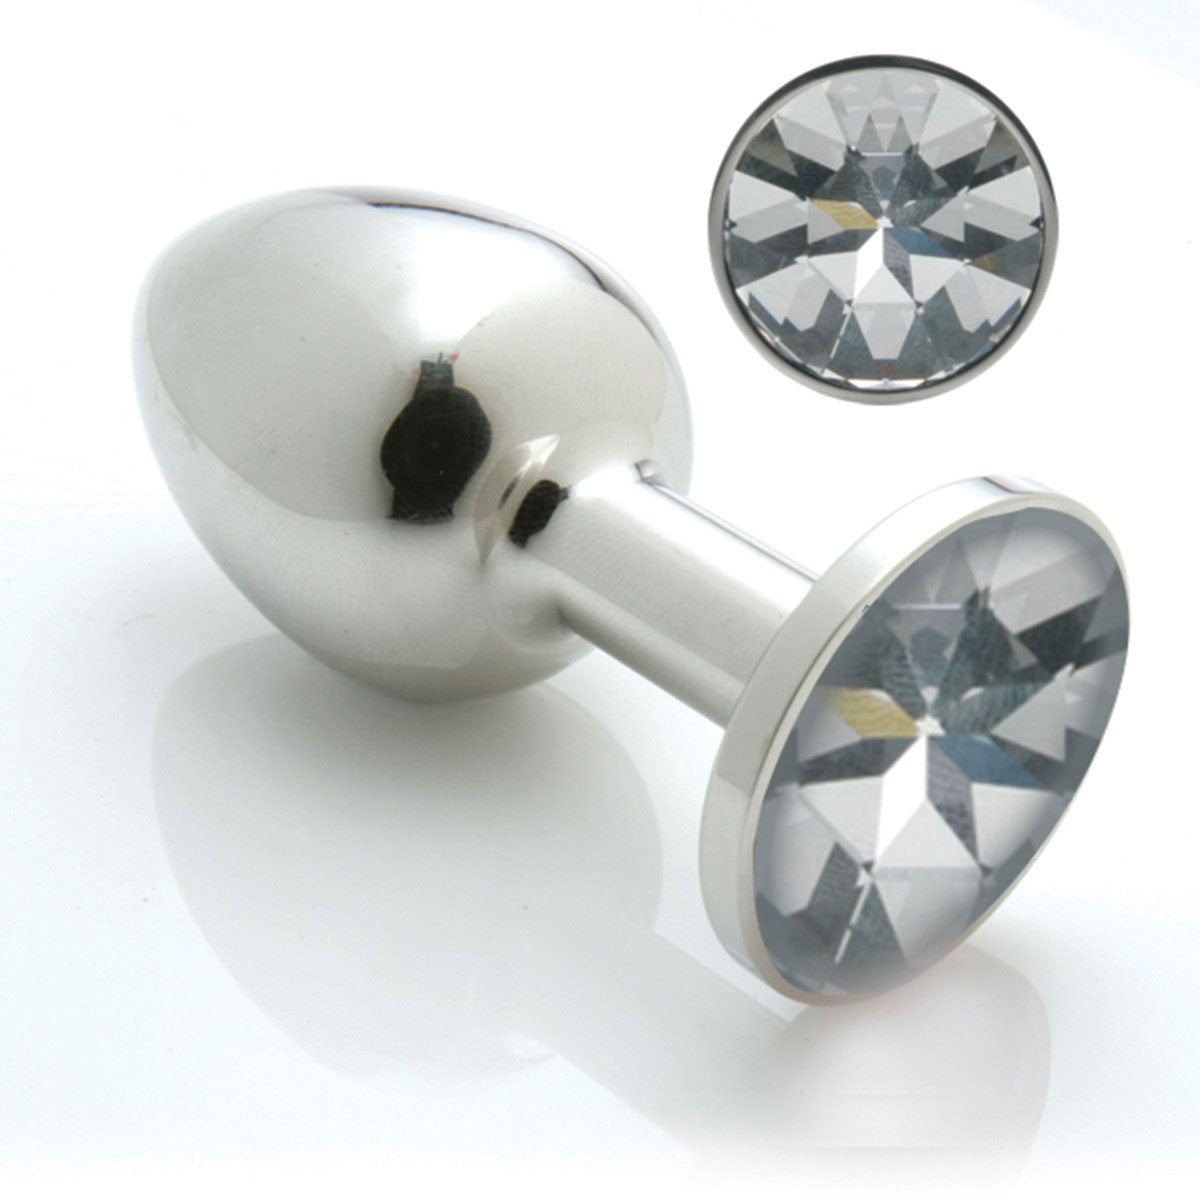 Pretty Plugs Stainless Steel Butt Plug w/ Swarovski Crystal - Medium Crystal Clear